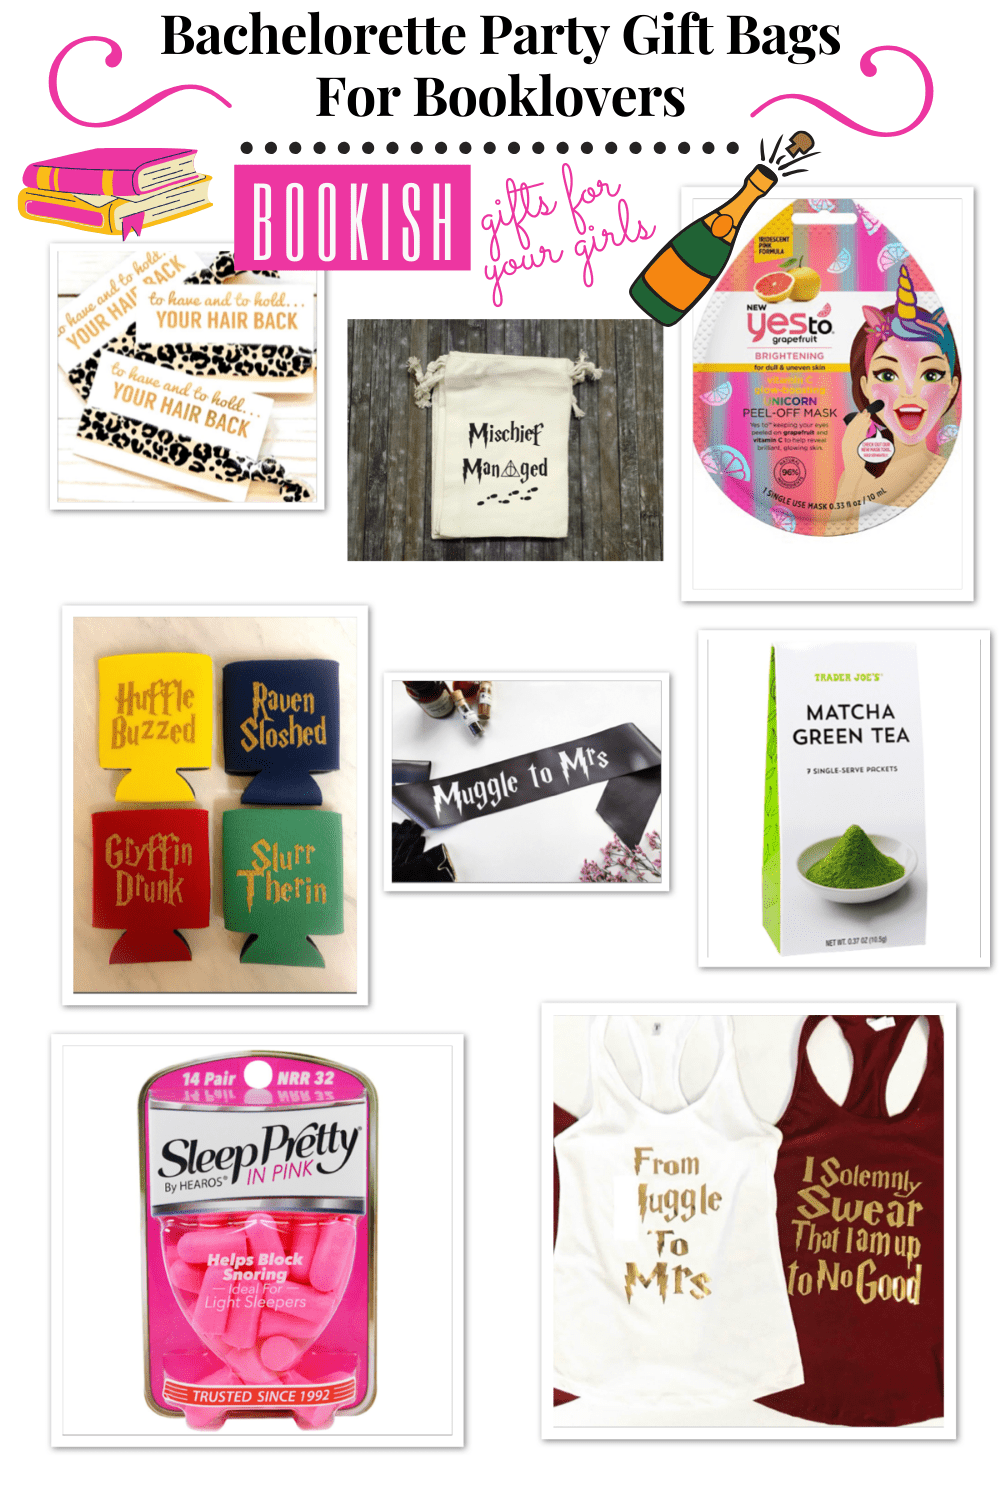 https://rektokross.com/wp-content/uploads/2019/07/Bachelorette-Party-gift-bag-for-booklovers.png